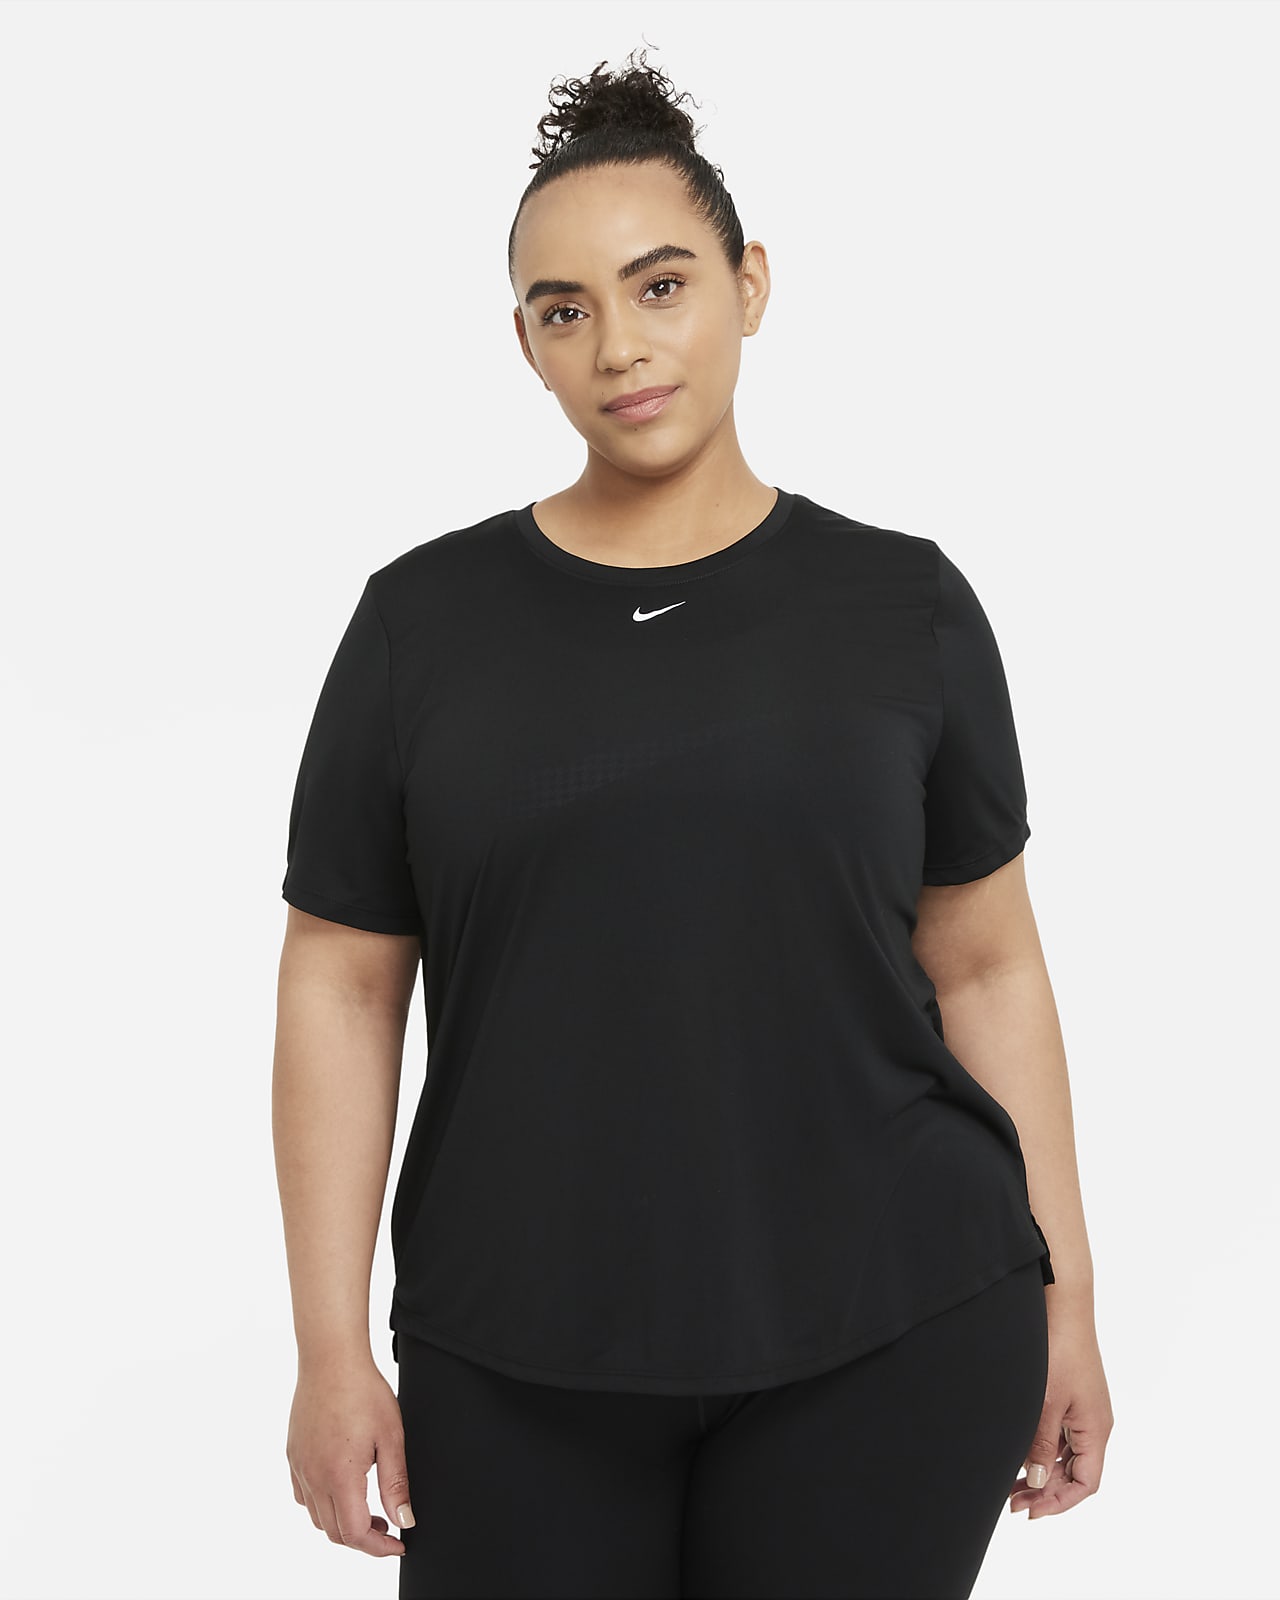 Camiseta manga corta mujer Nike Slim Fit